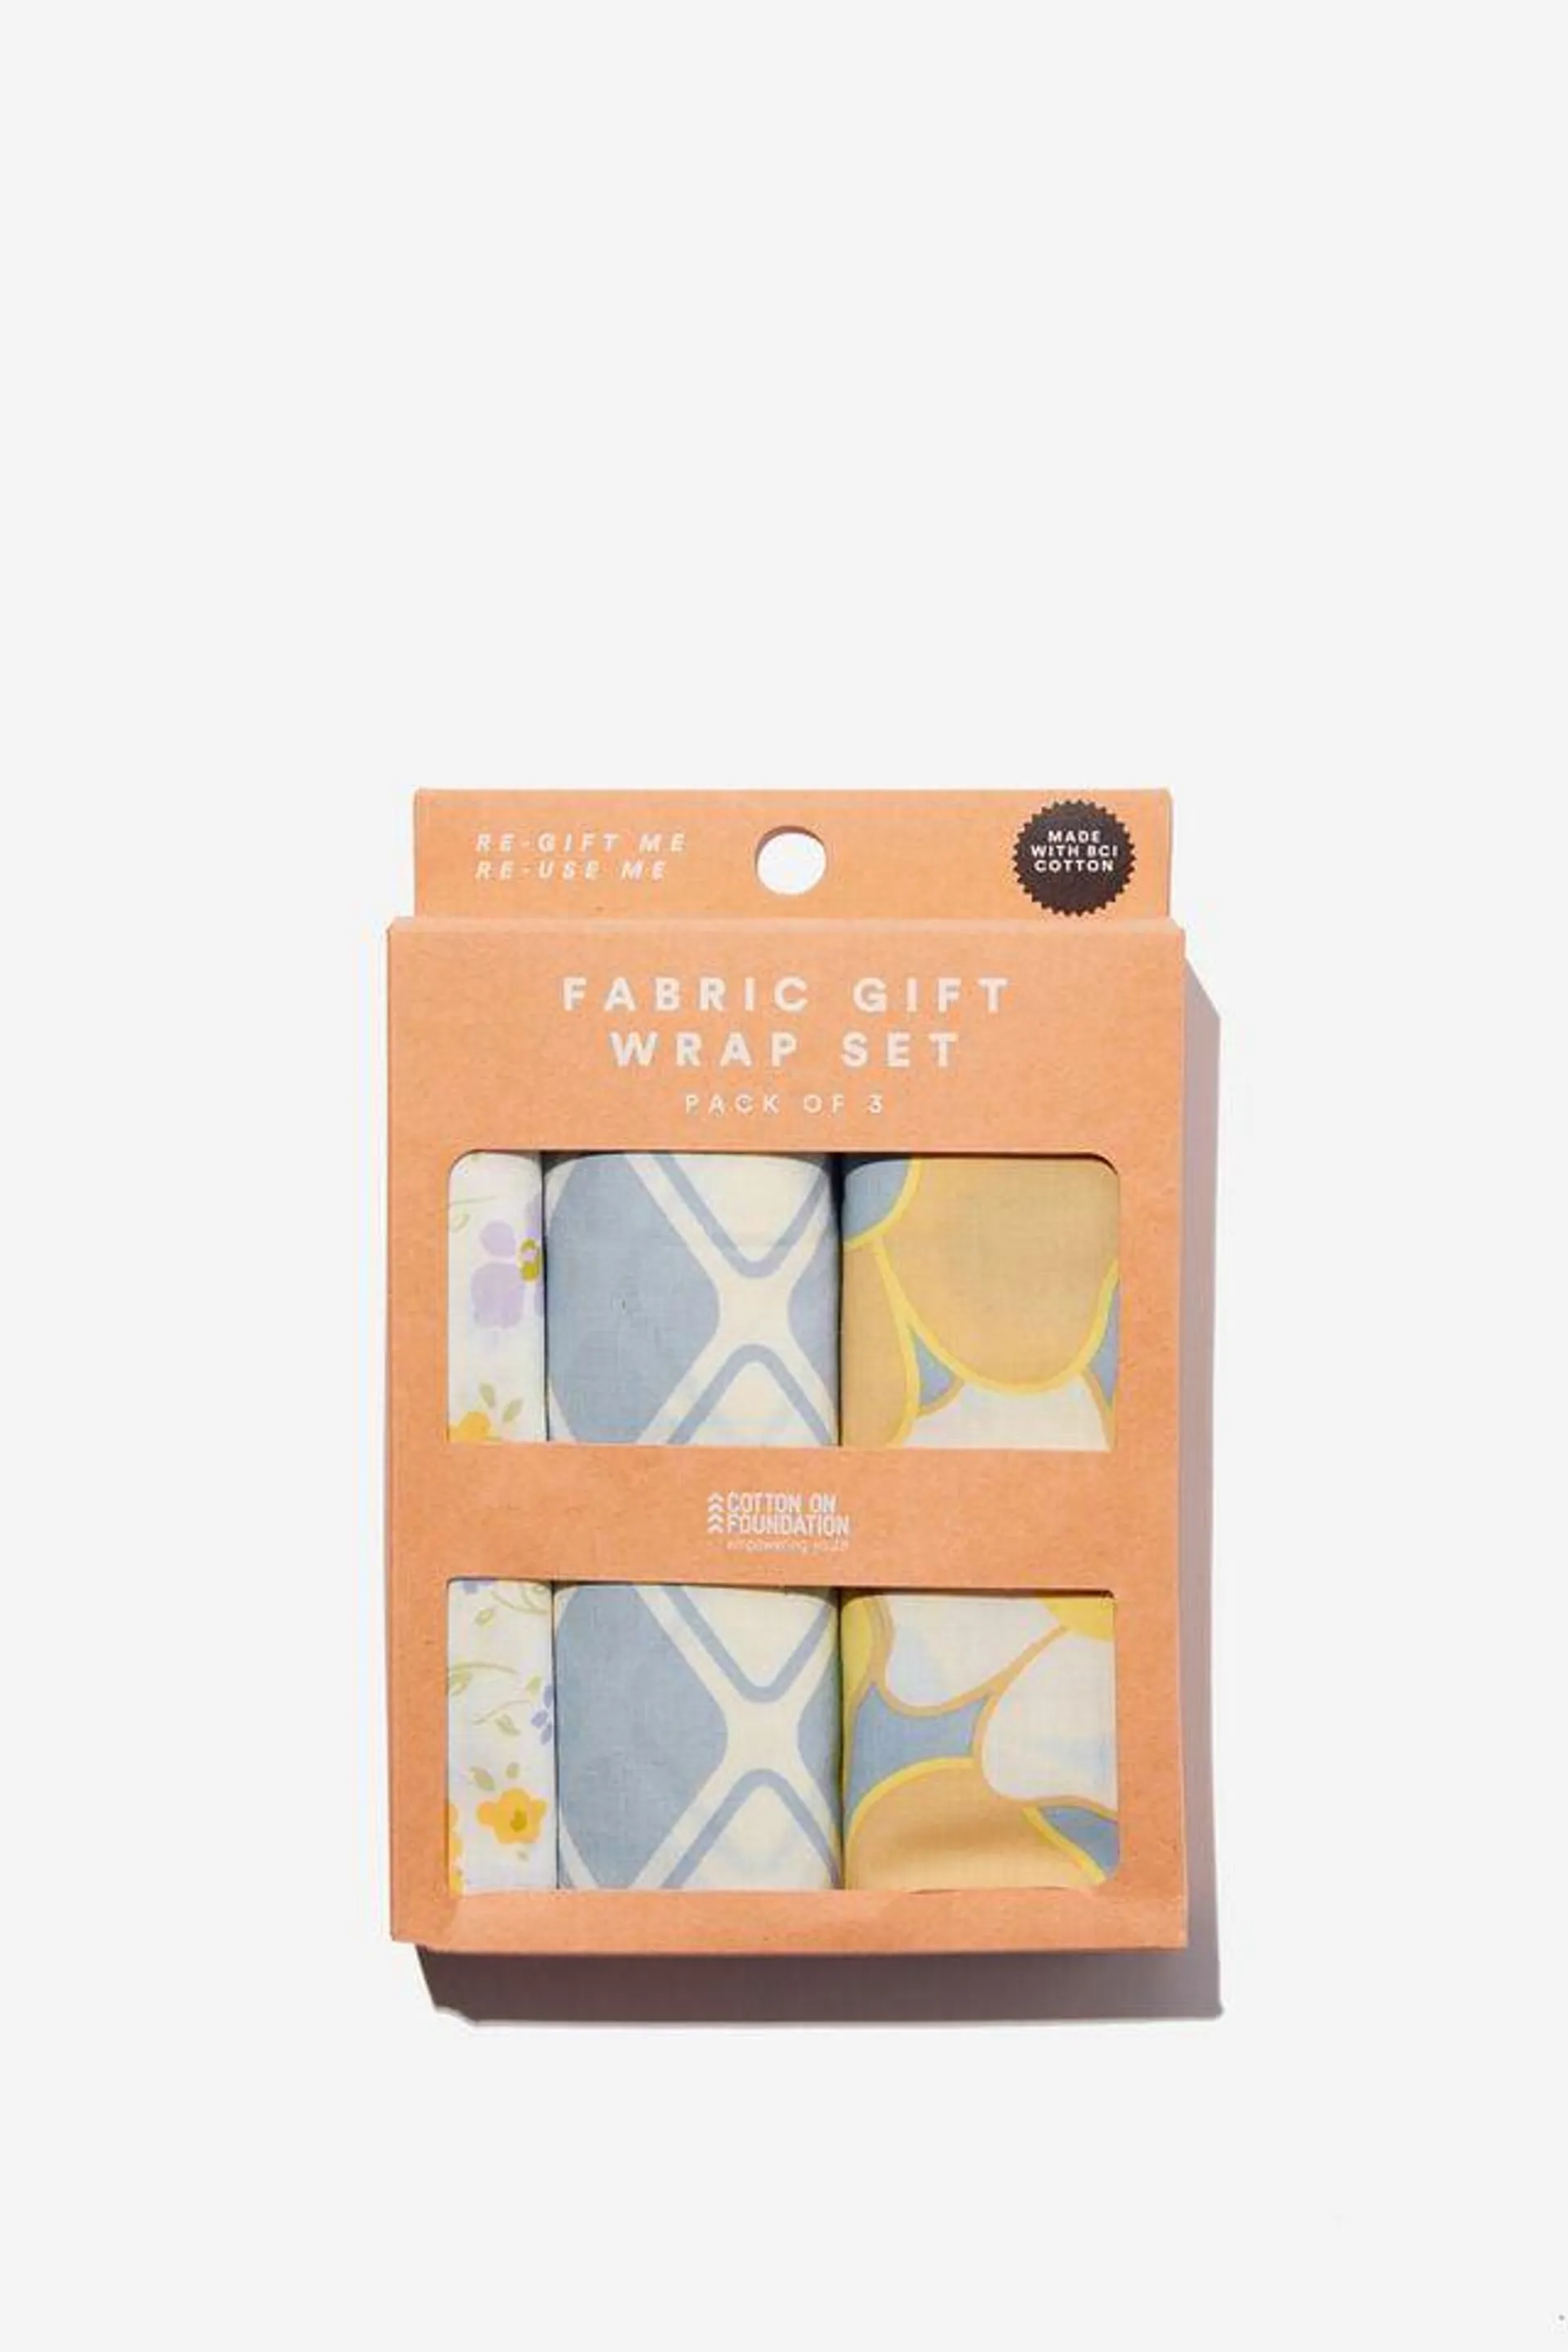 Foundation Adults Fabric Gift Wrap Set